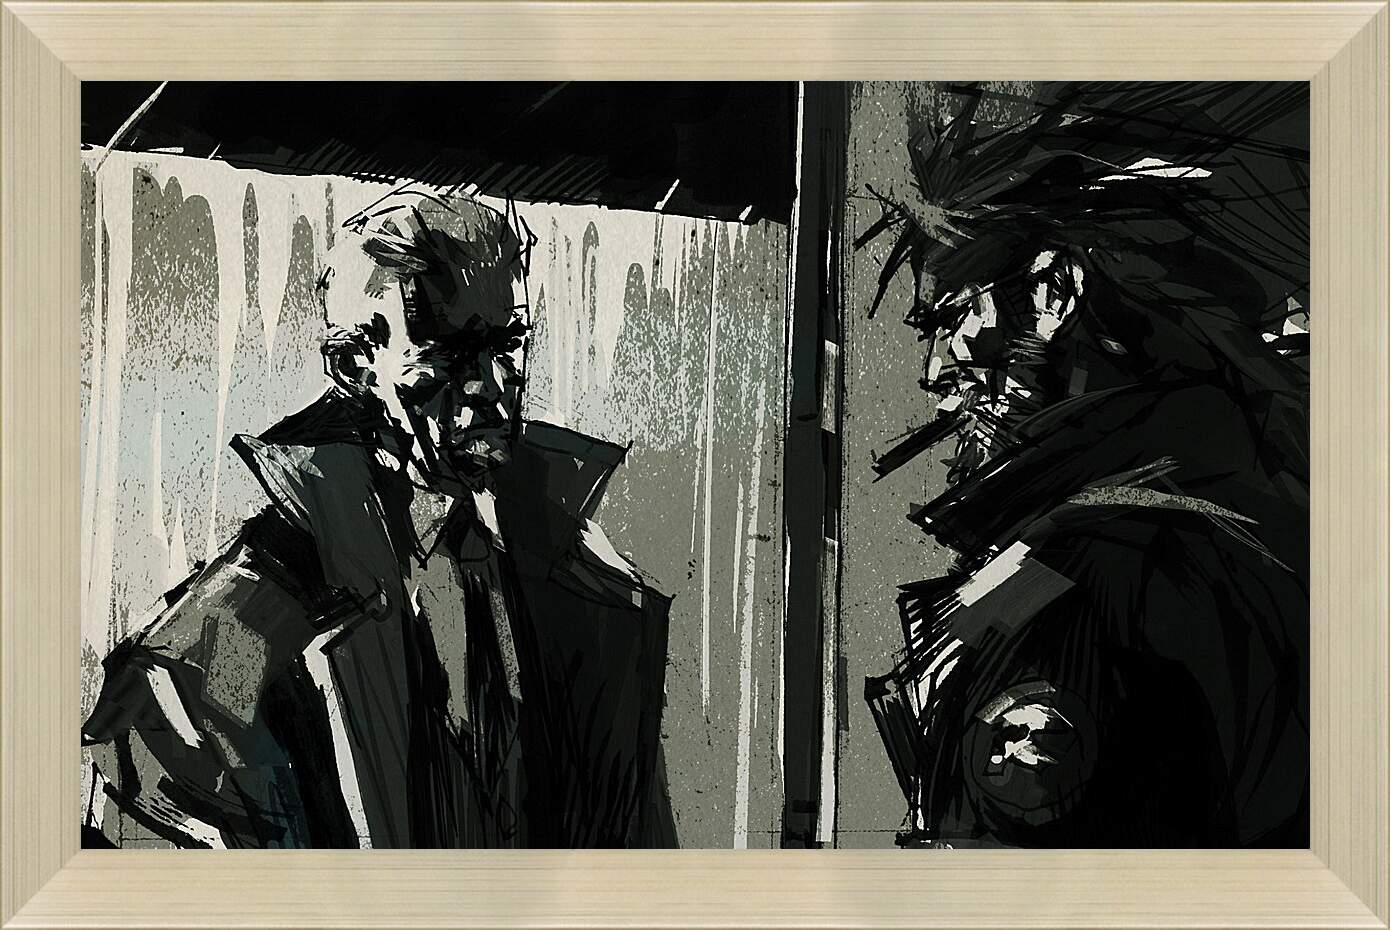 Картина в раме - Metal Gear
